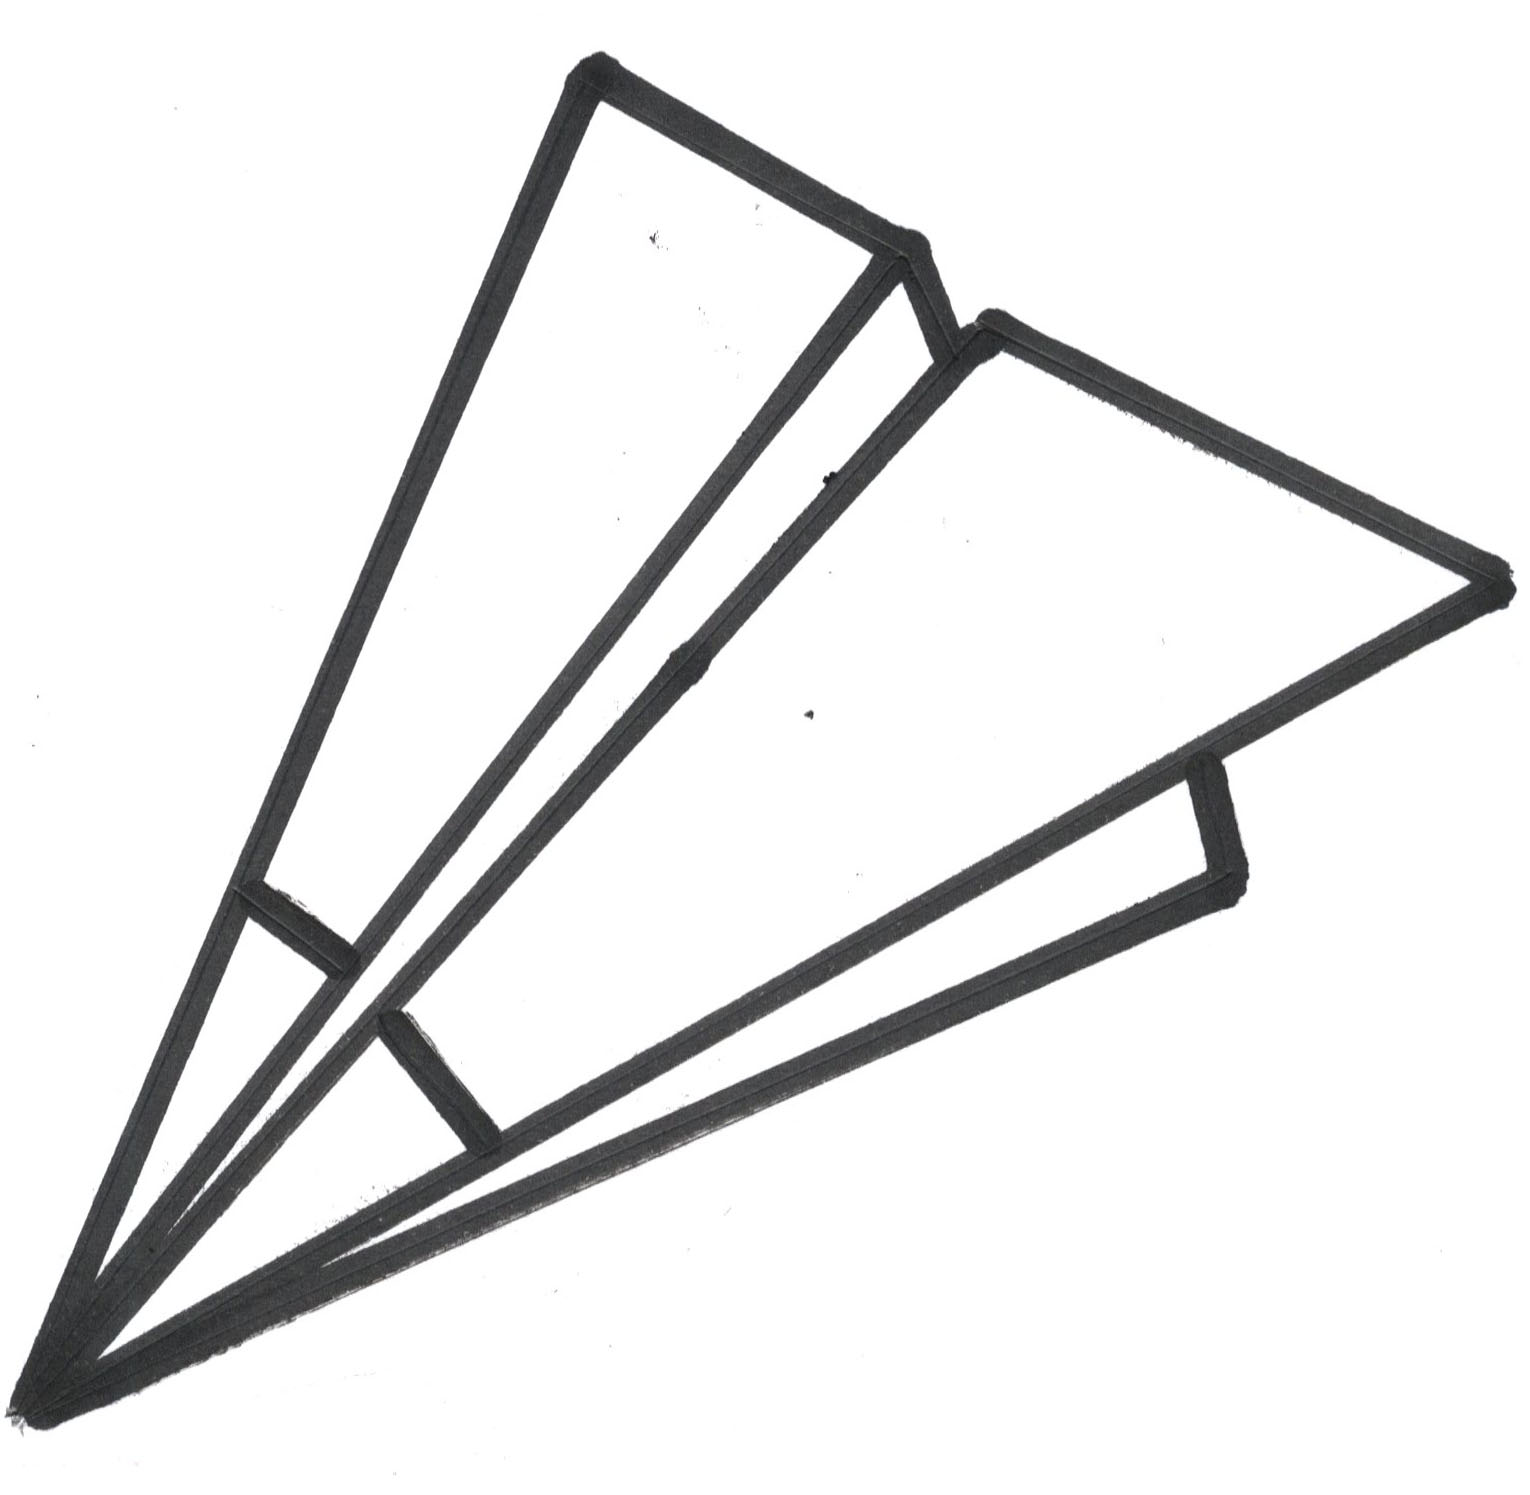 Paper Airplane Clipart Item